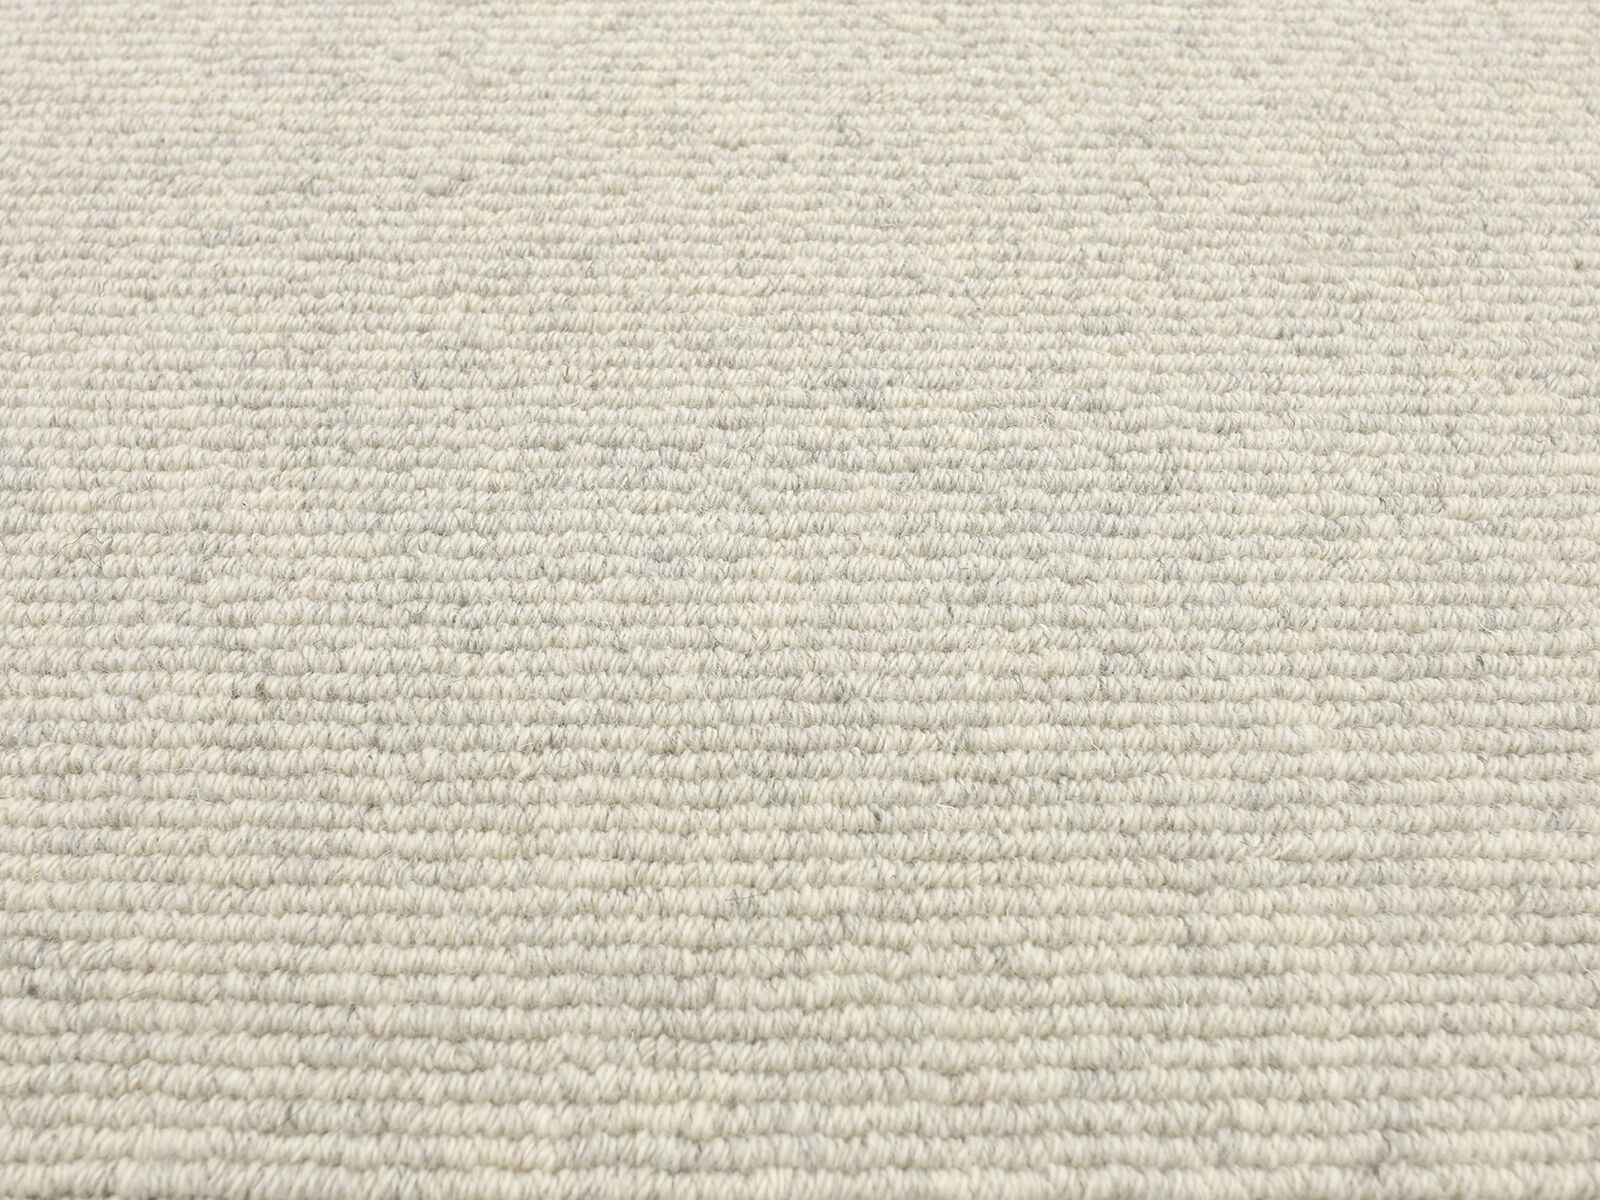 Cormo Schlingenteppich, 100% Wolle, anti-rutsch, Wunschmaß & Wunschform, 119, Mustermaterial